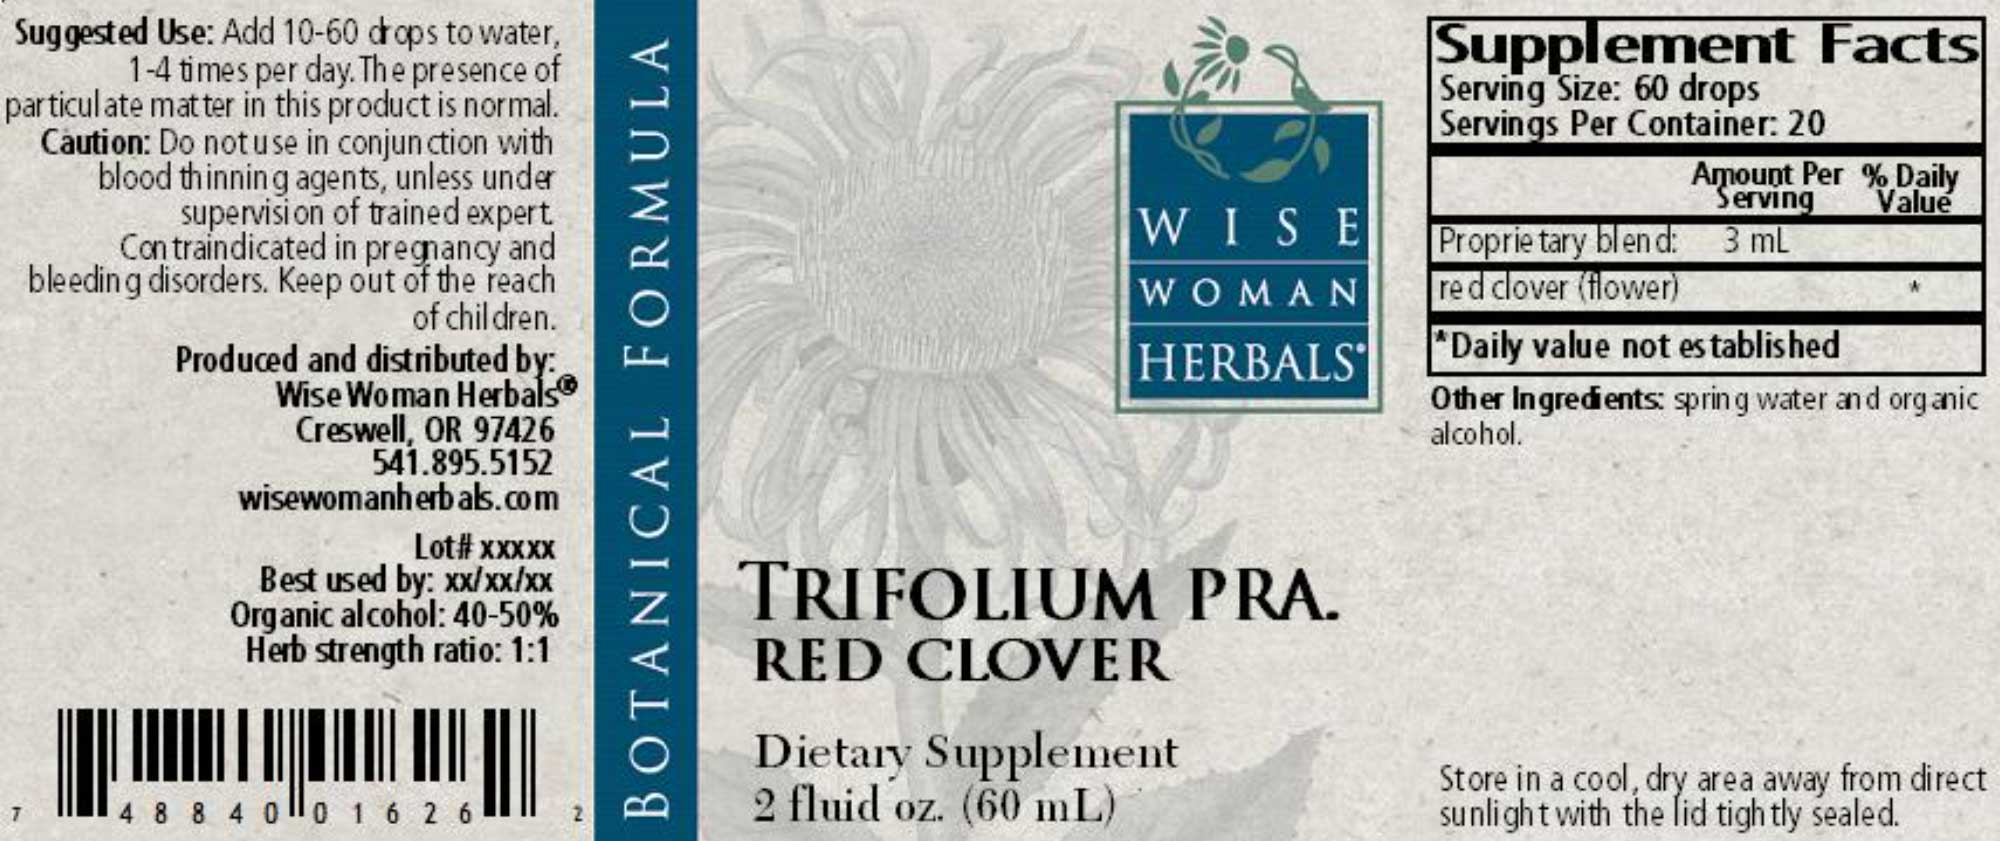 Wise Woman Herbals Trifolium Pratense Red Clover Label